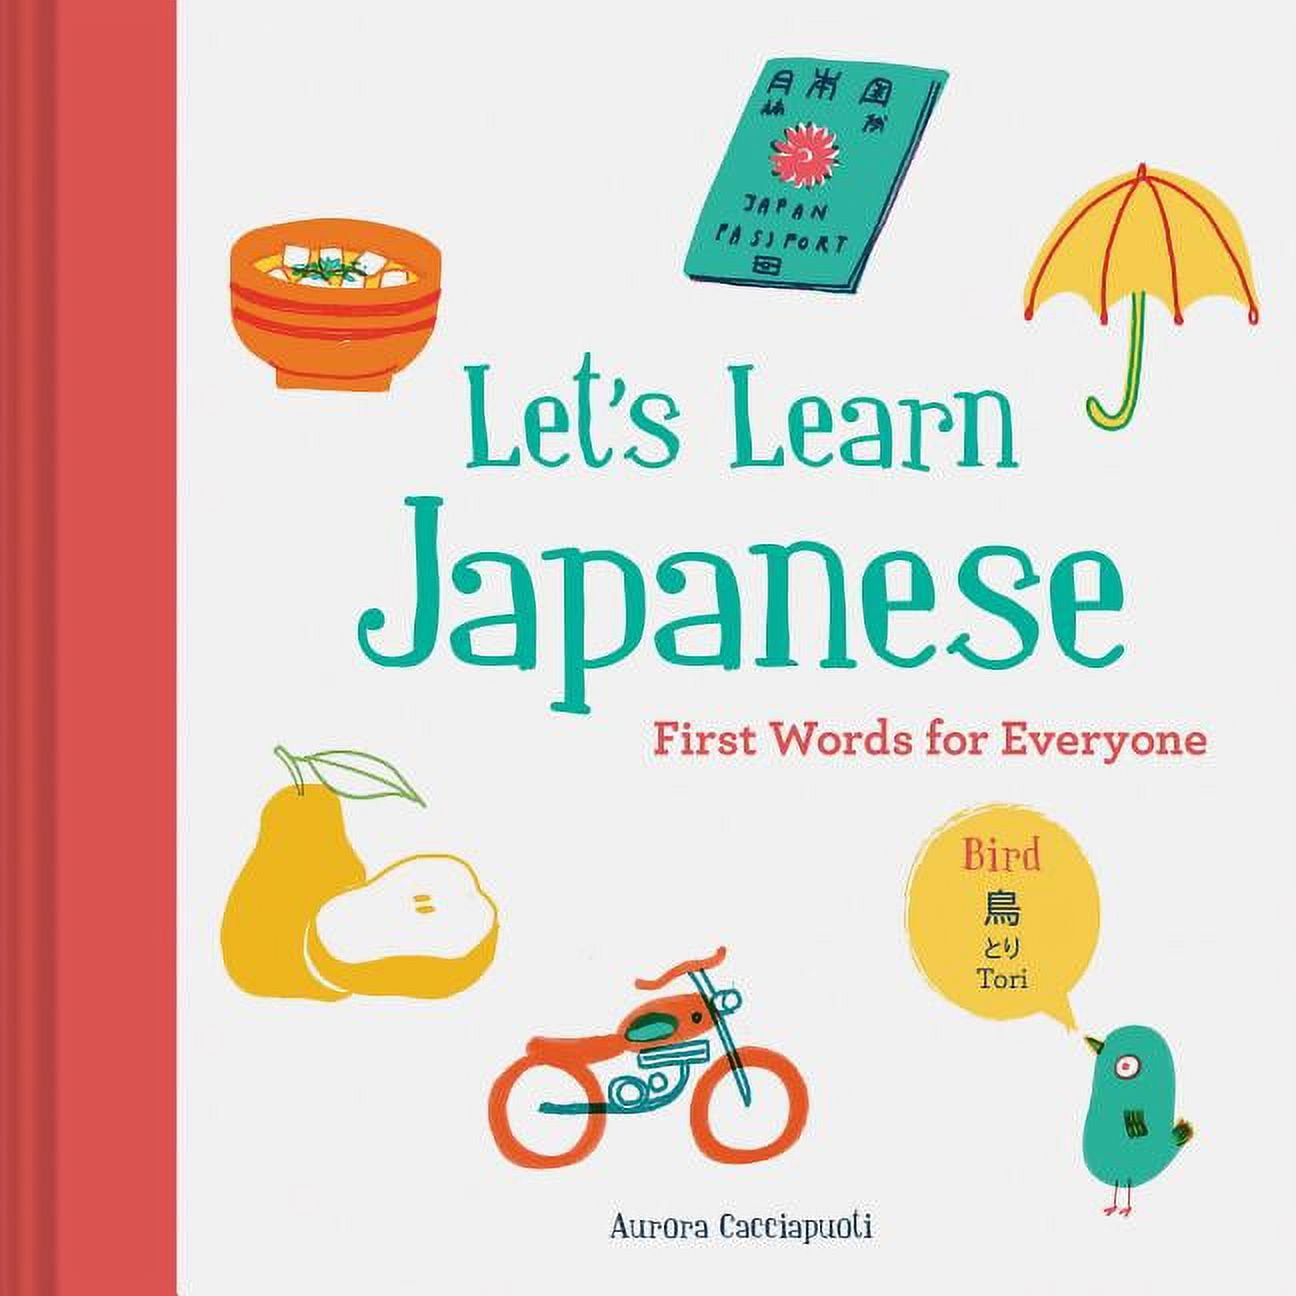 Murasaki: Japanese Learning Book_Beginner A1 [Book]